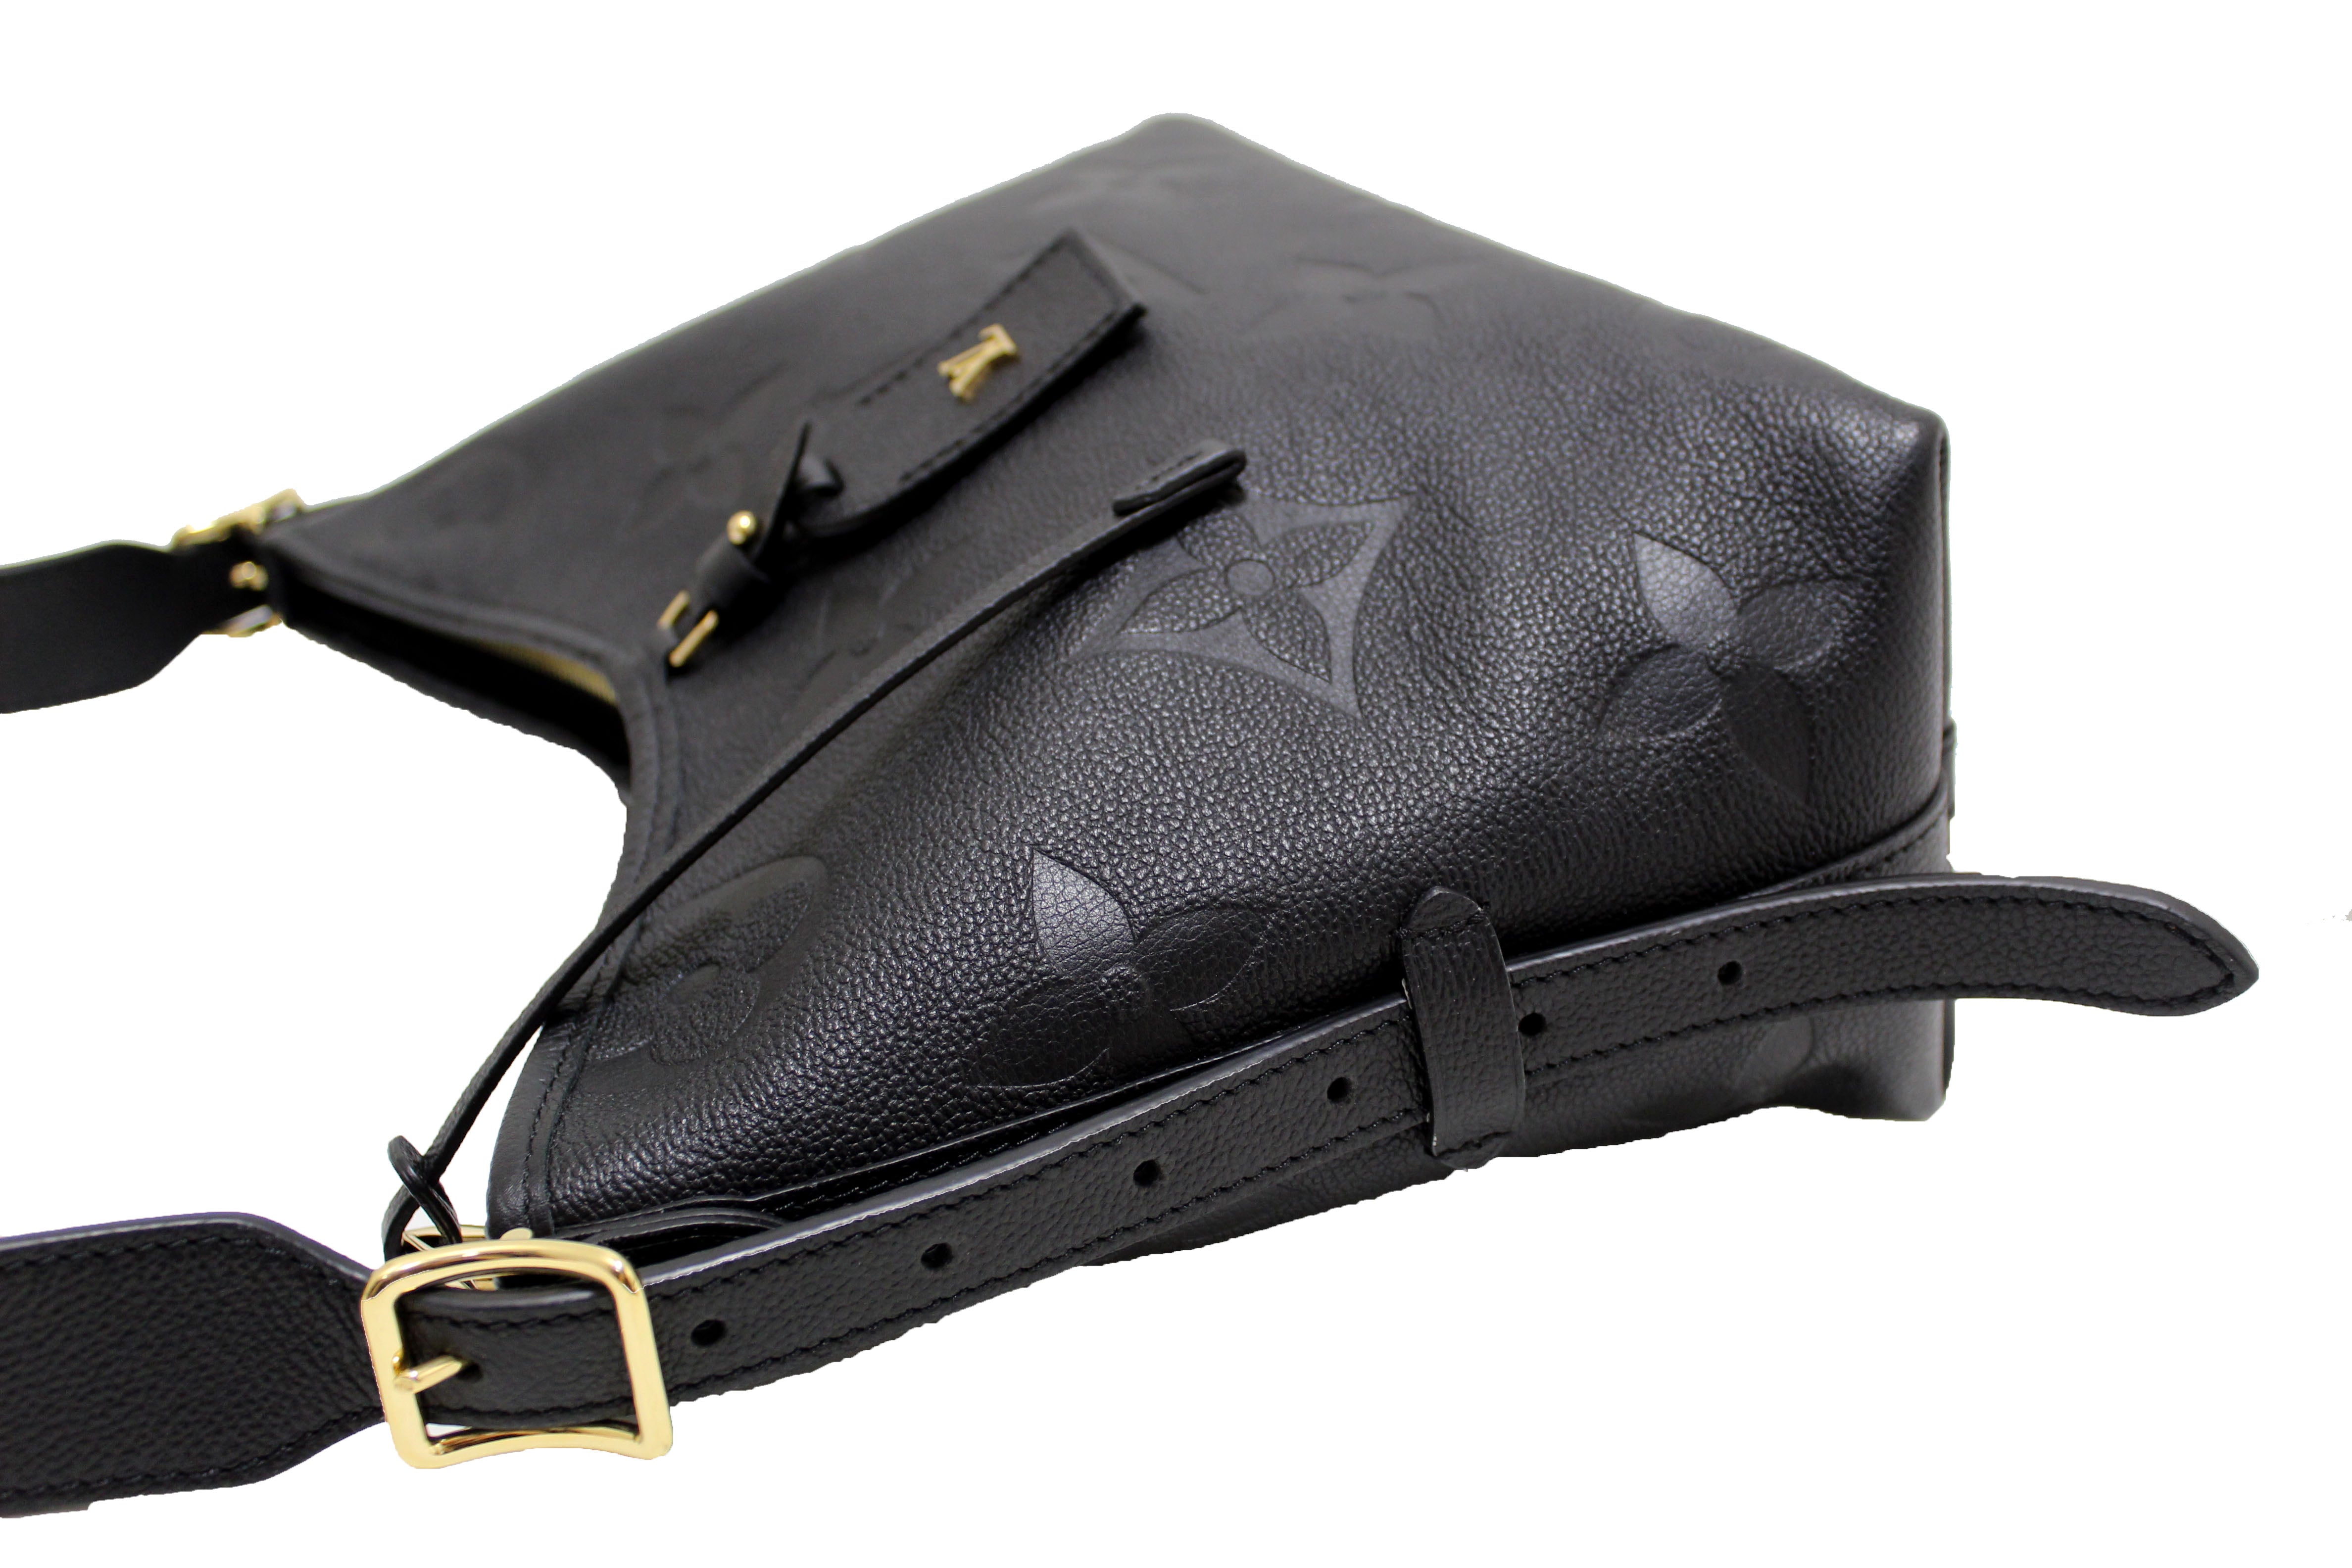 Louis Vuitton Monogram Empreinte Leather Carryall PM Bag